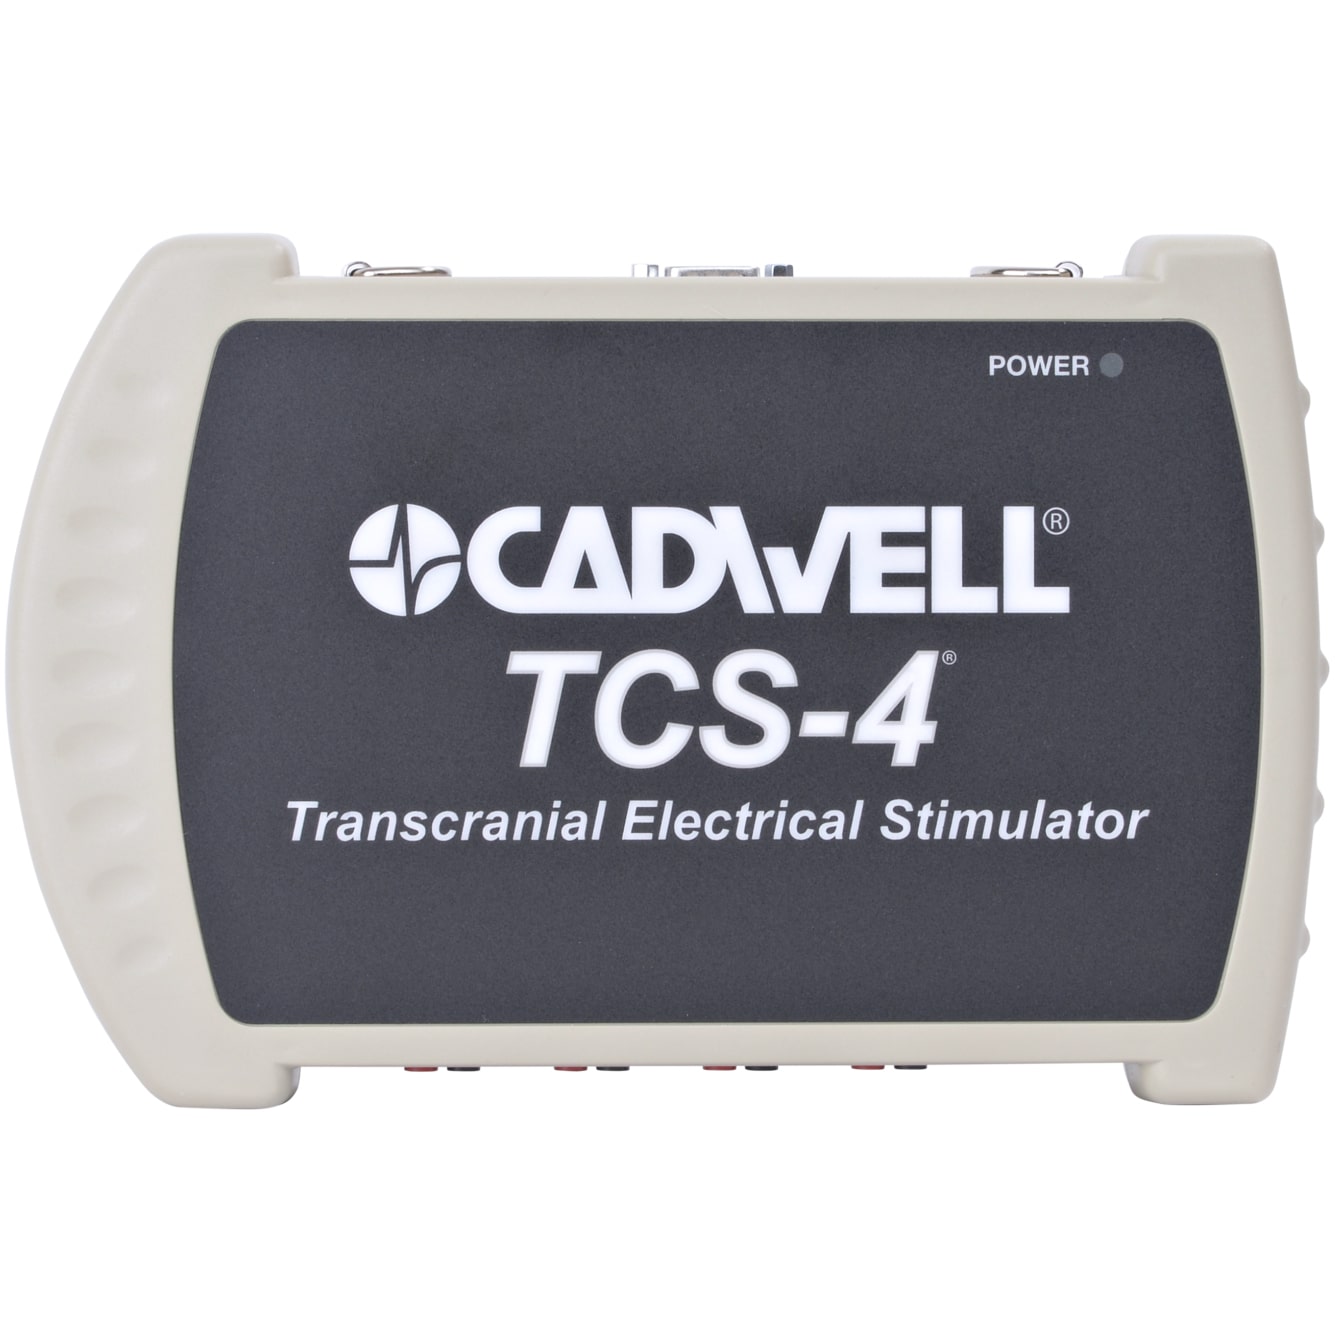 Cadwell TCS-4 Transcranial Electrical Stimulator